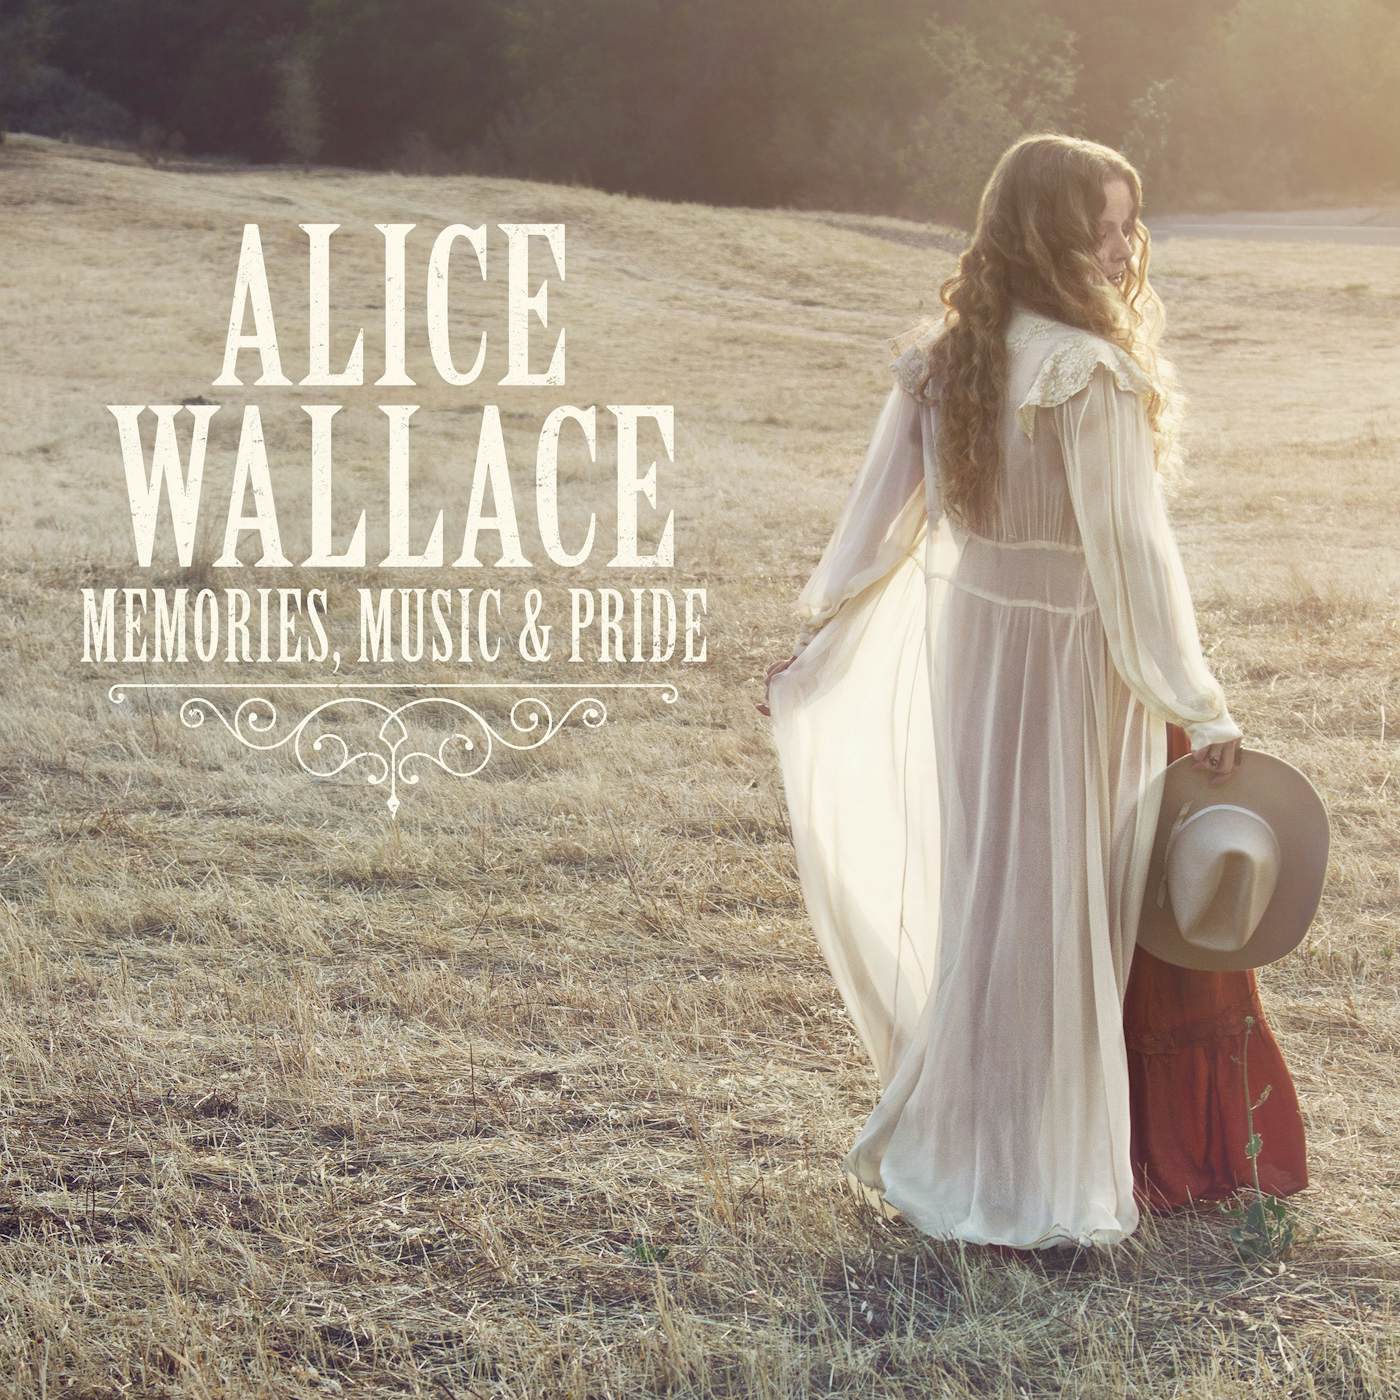 Alice Wallace MEMORIES MUSIC & PRIDE CD